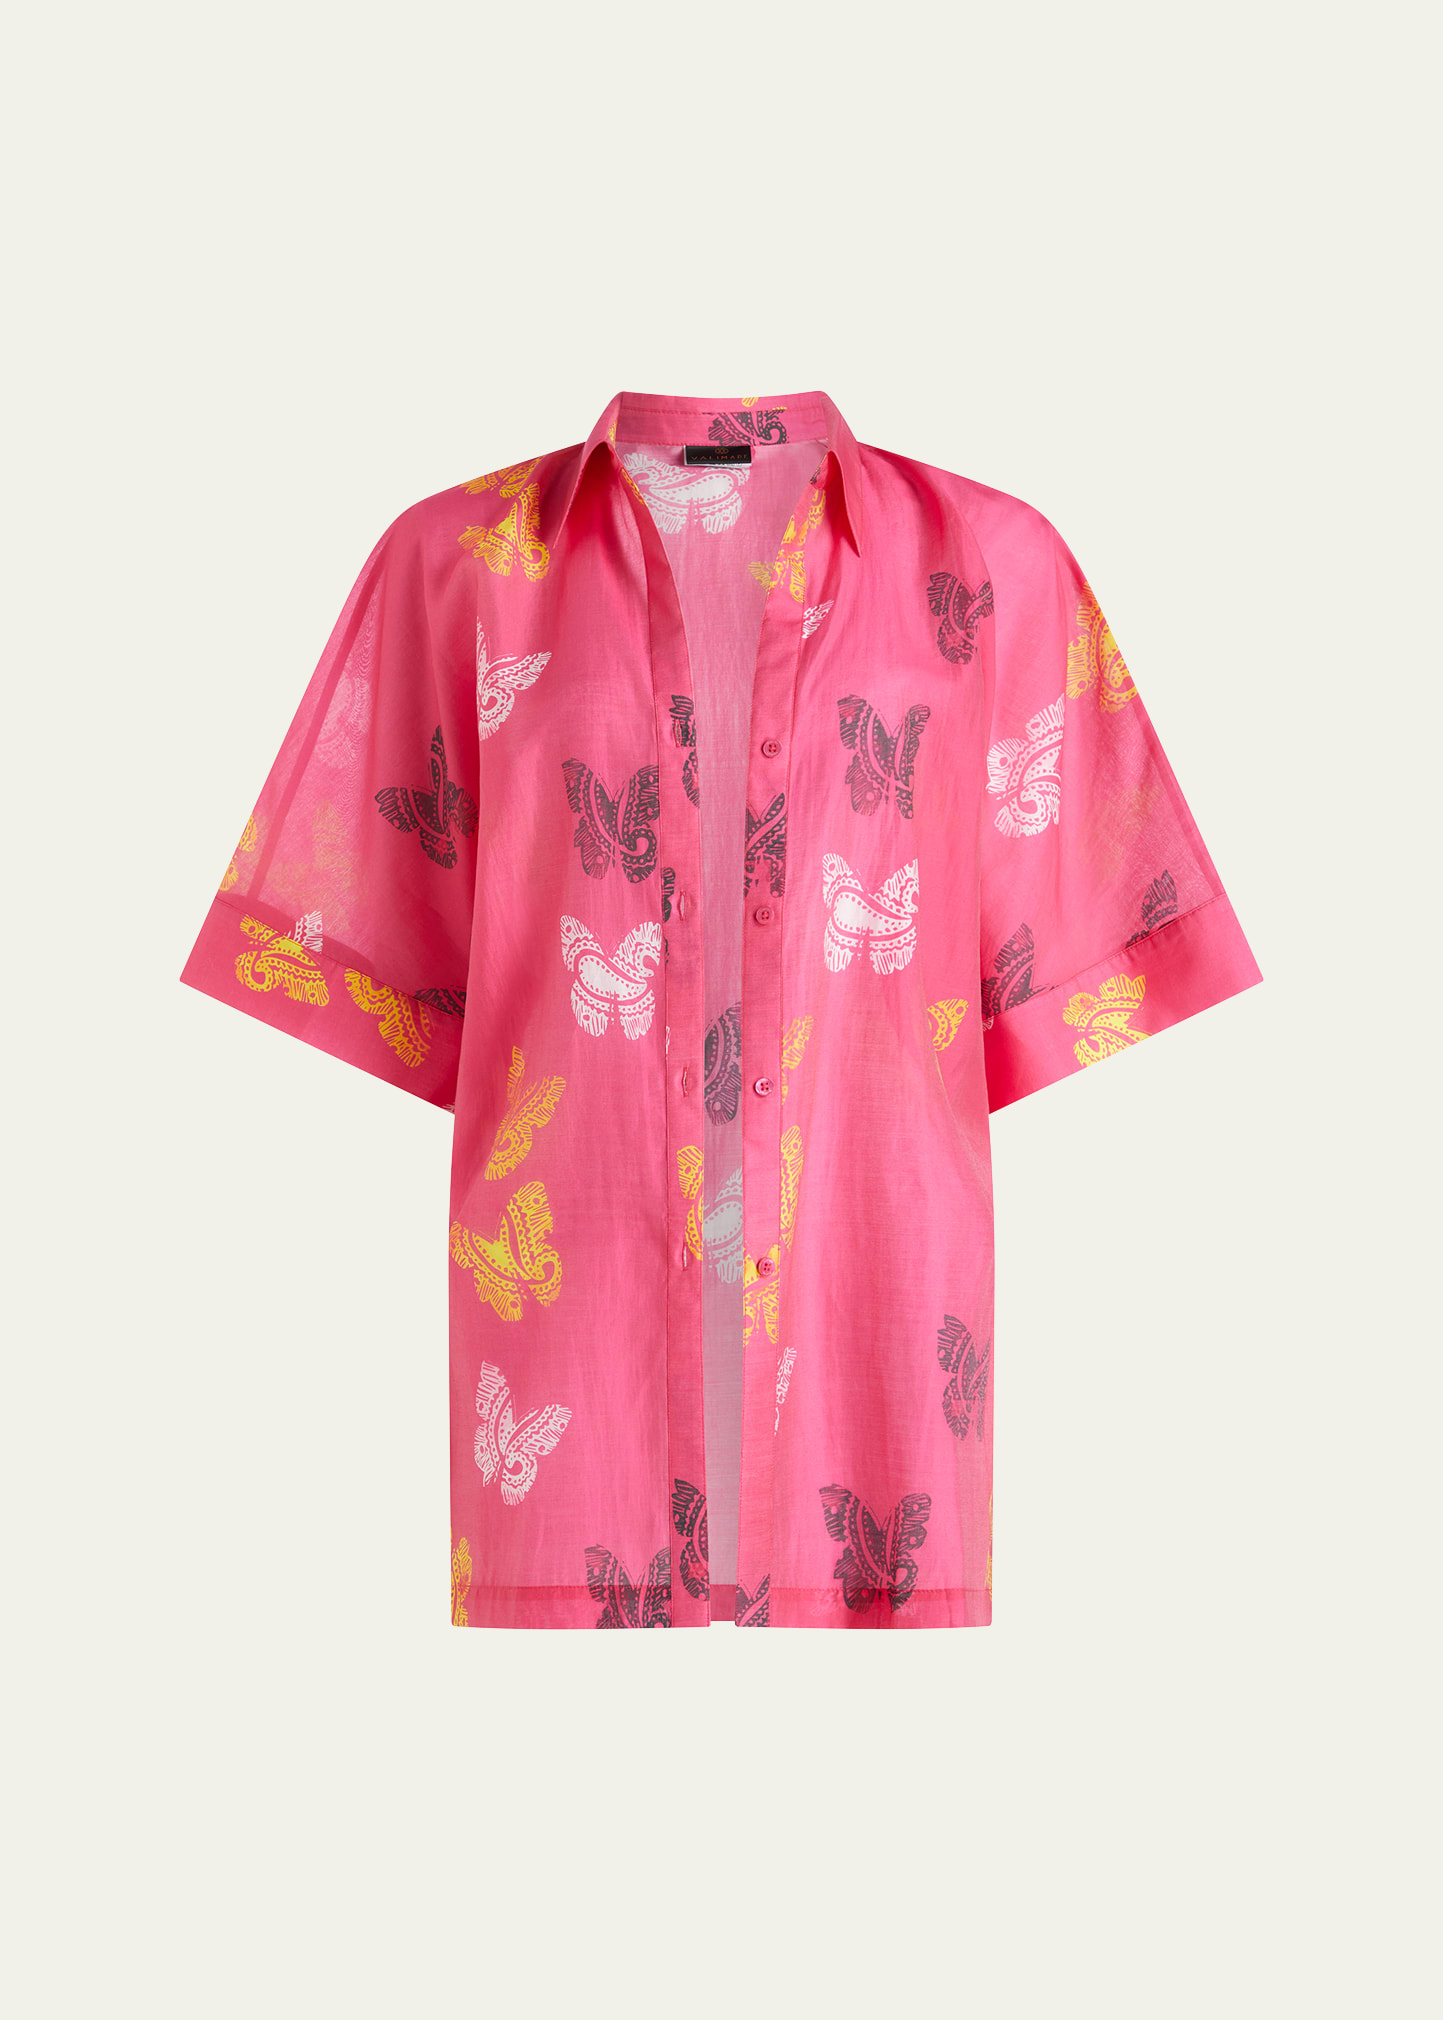 Sydney Sheer Butterfly Shirtdress